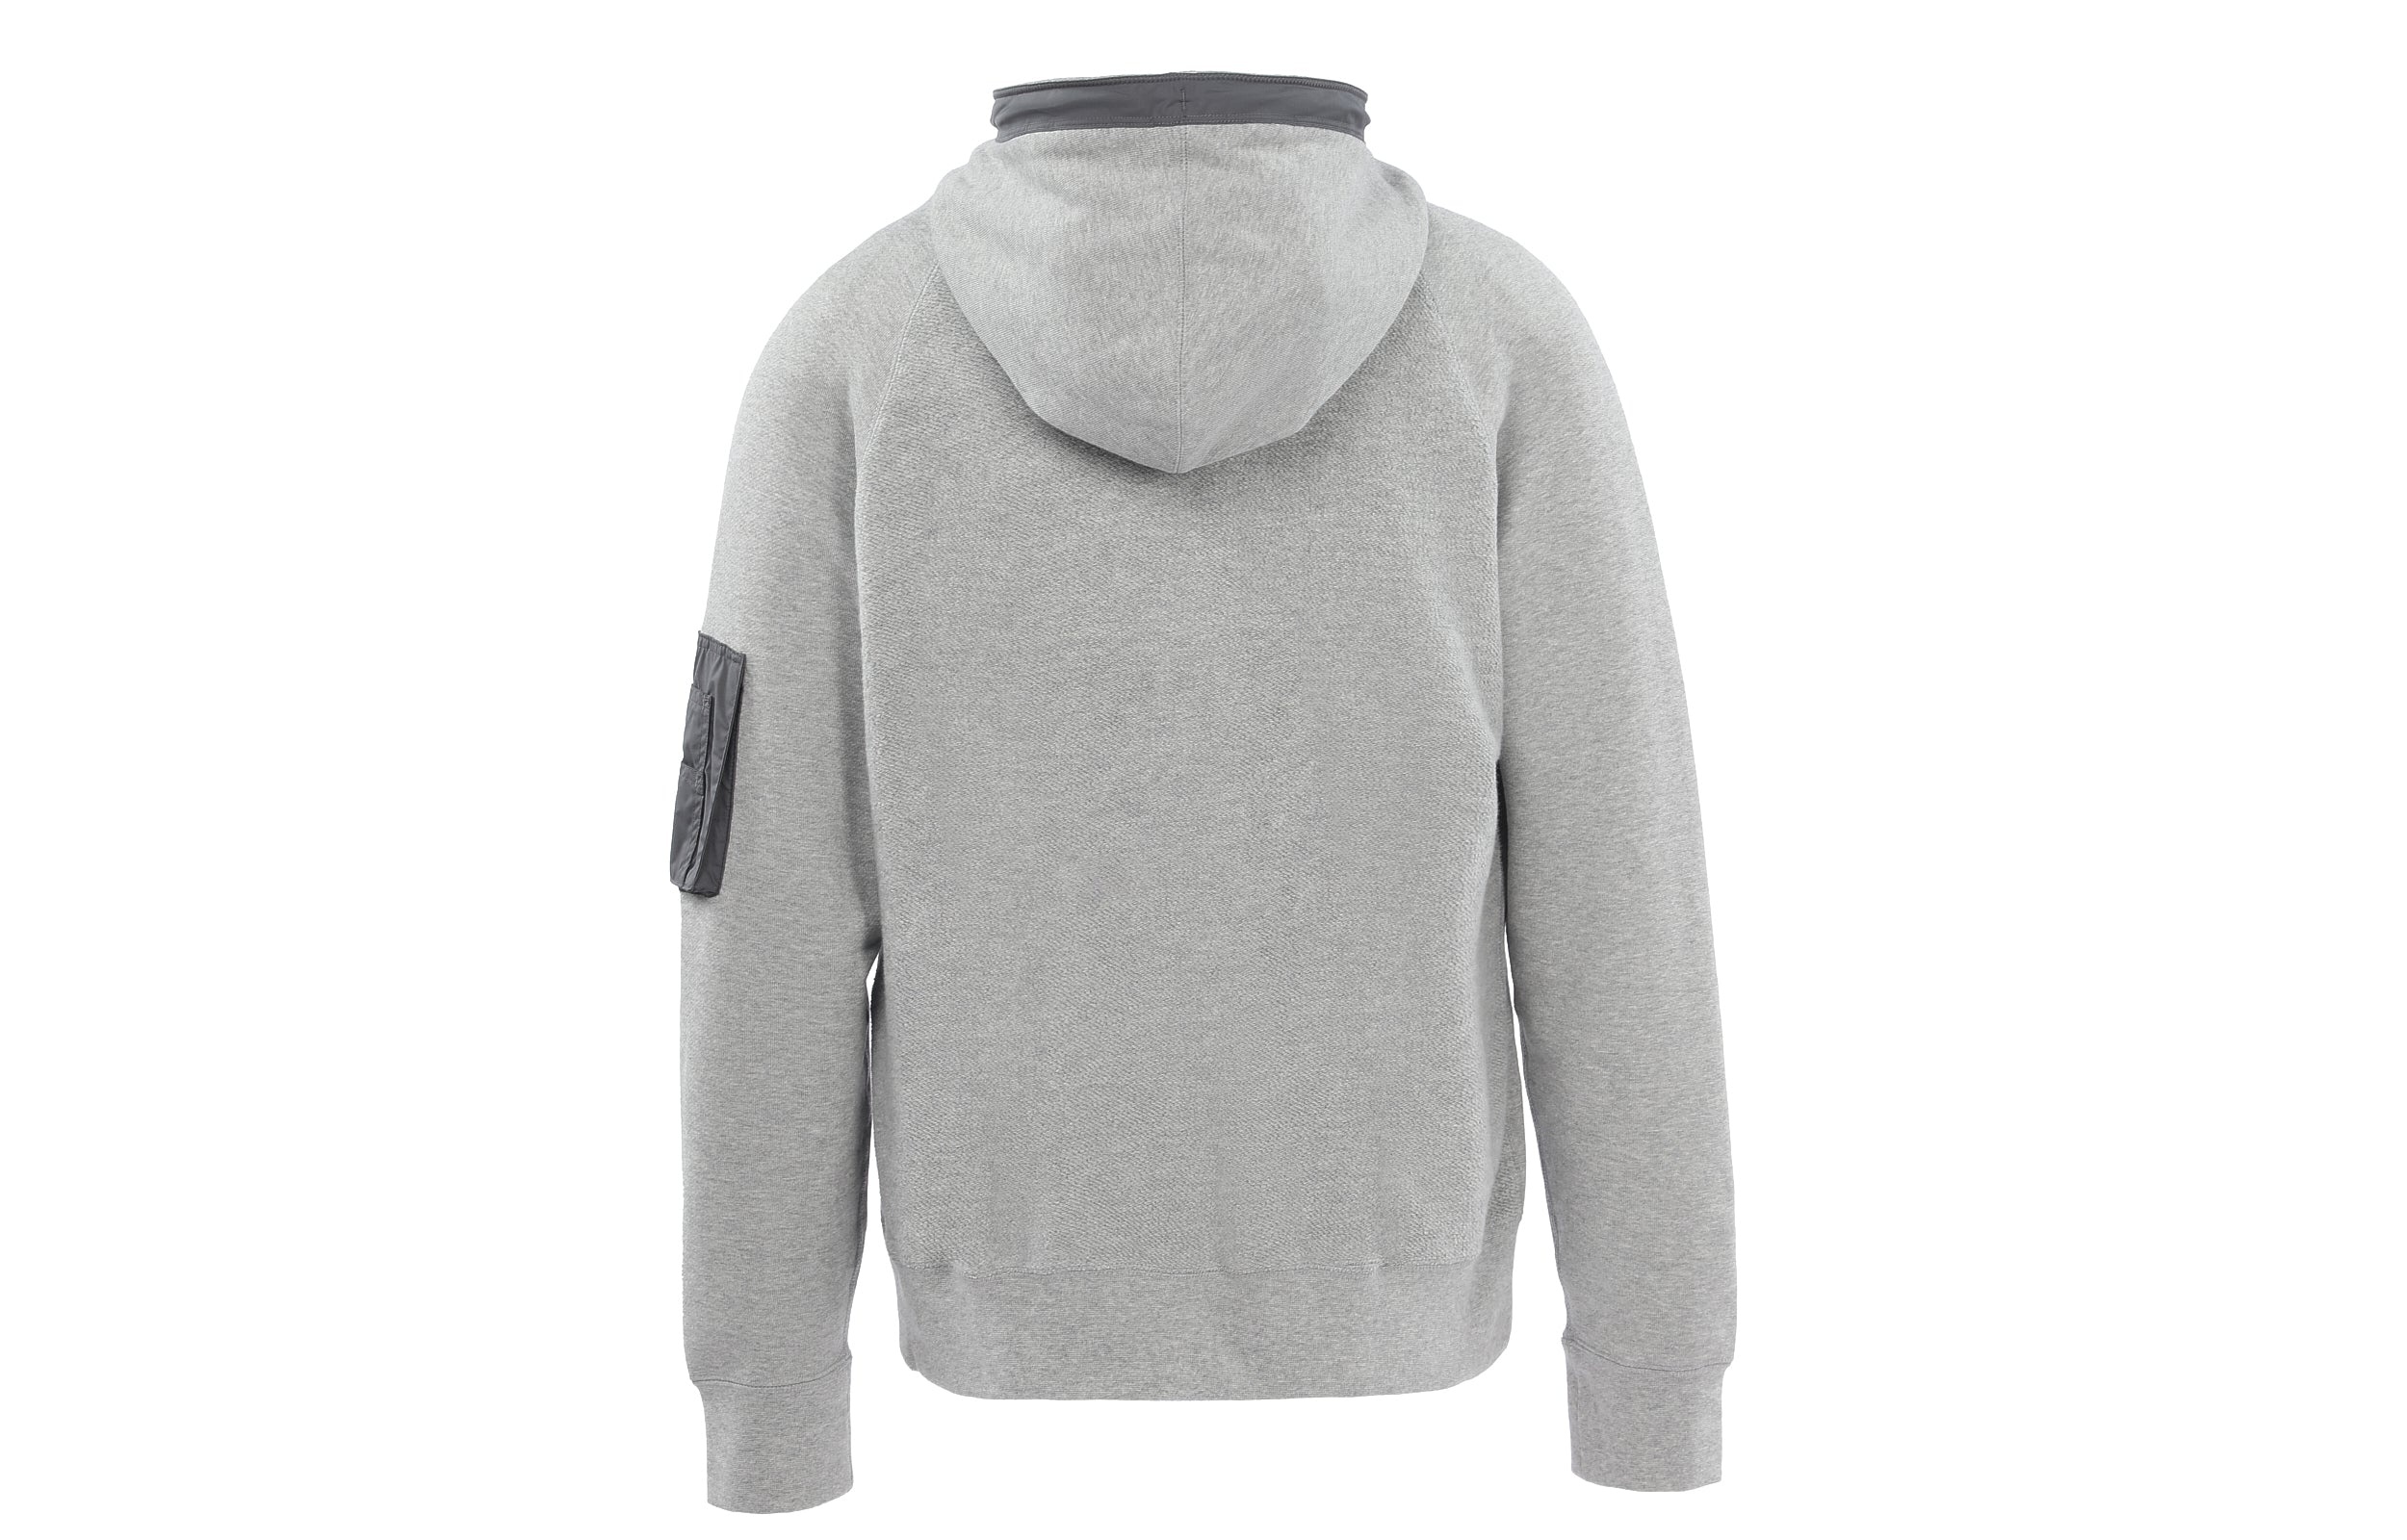 Nike Sportswear logo Printing Woven Pullover dark grey Gray CU3798-050 - 2